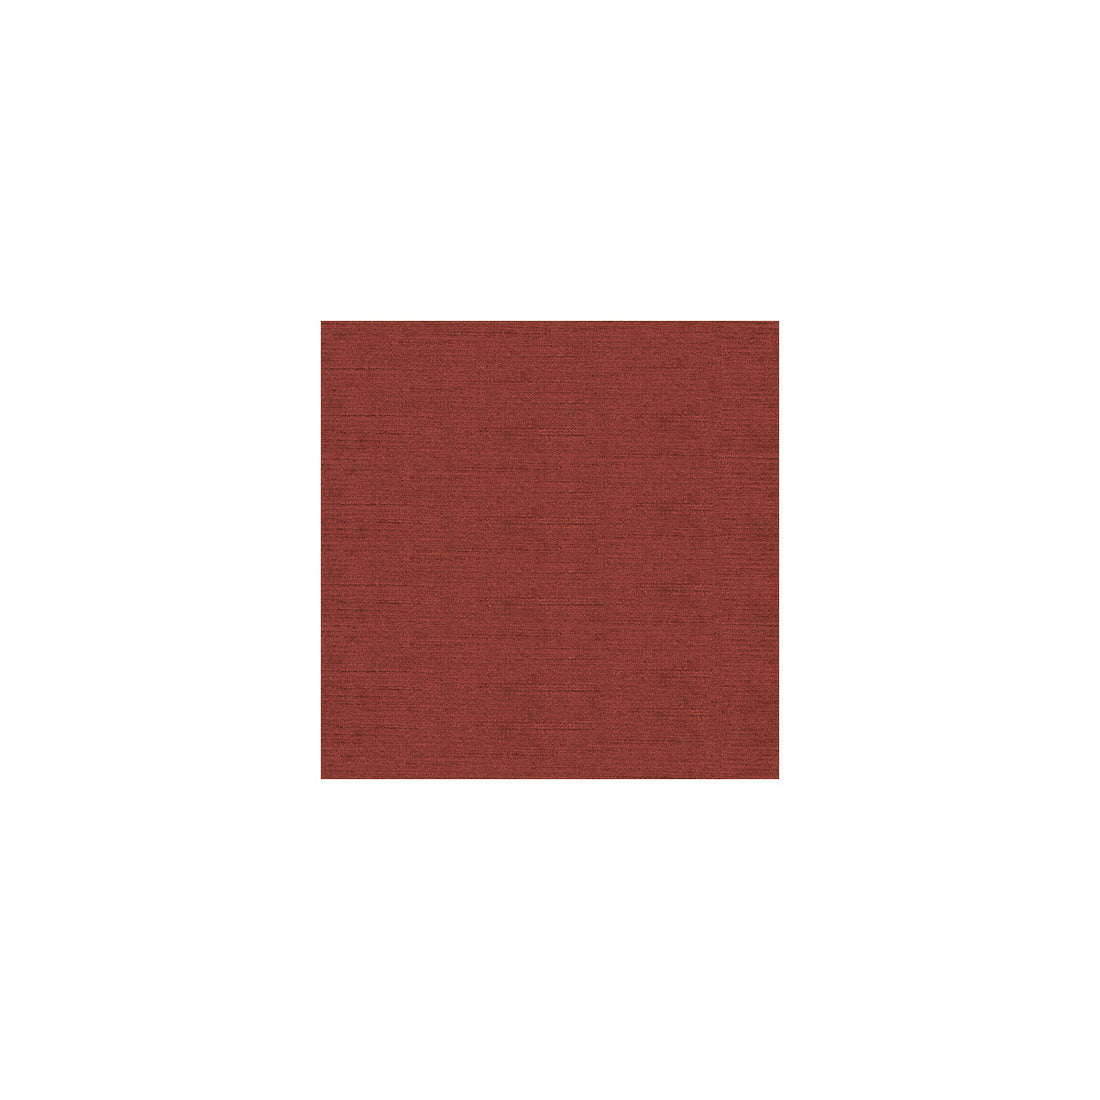 Venetian fabric in russet color - pattern 31326.1919.0 - by Kravet Design